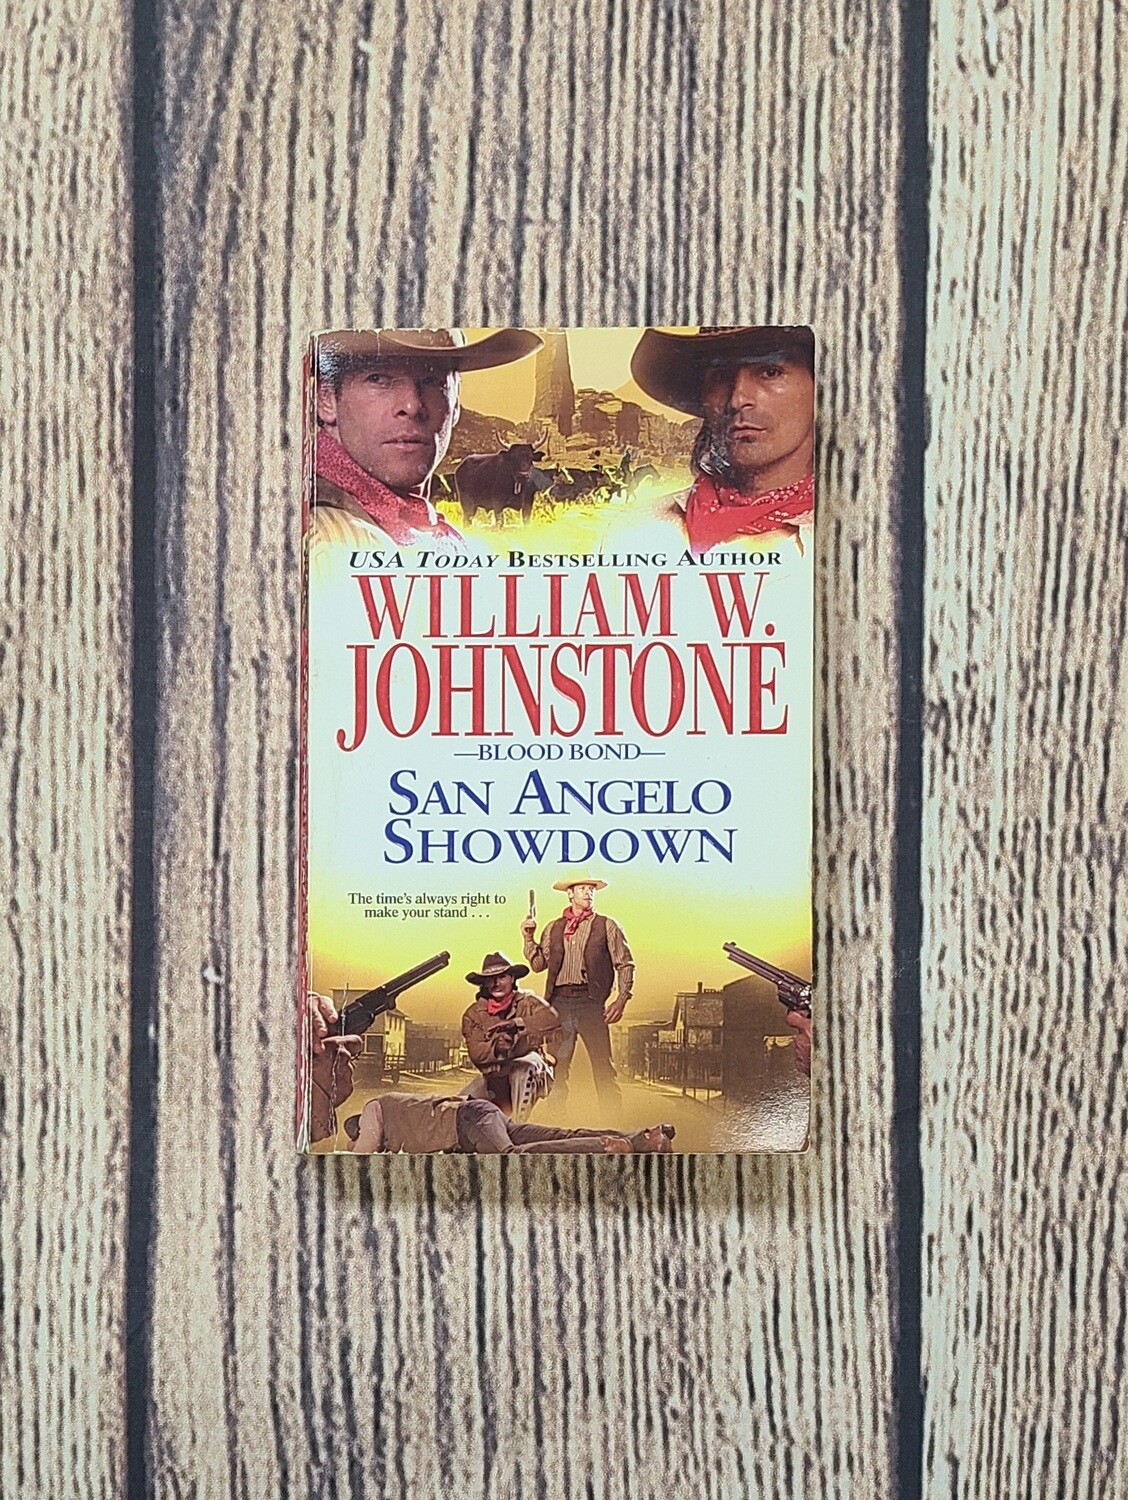 Blood Bond: San Angelo Showdown by William W. Johnstone